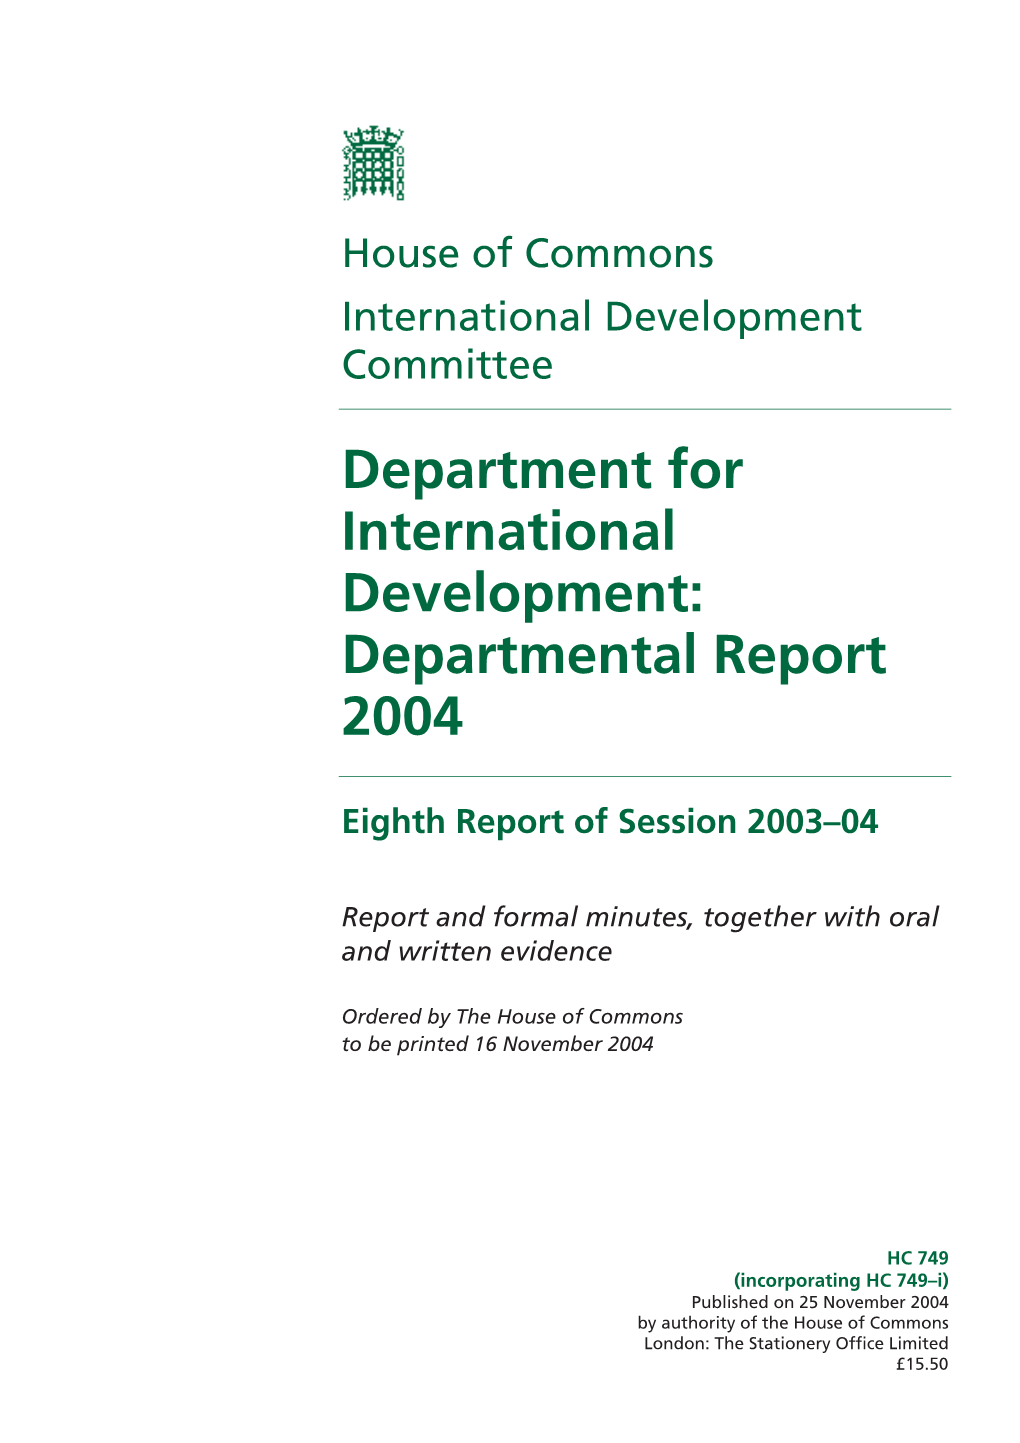 Department for International Development: Departmental Report 2004